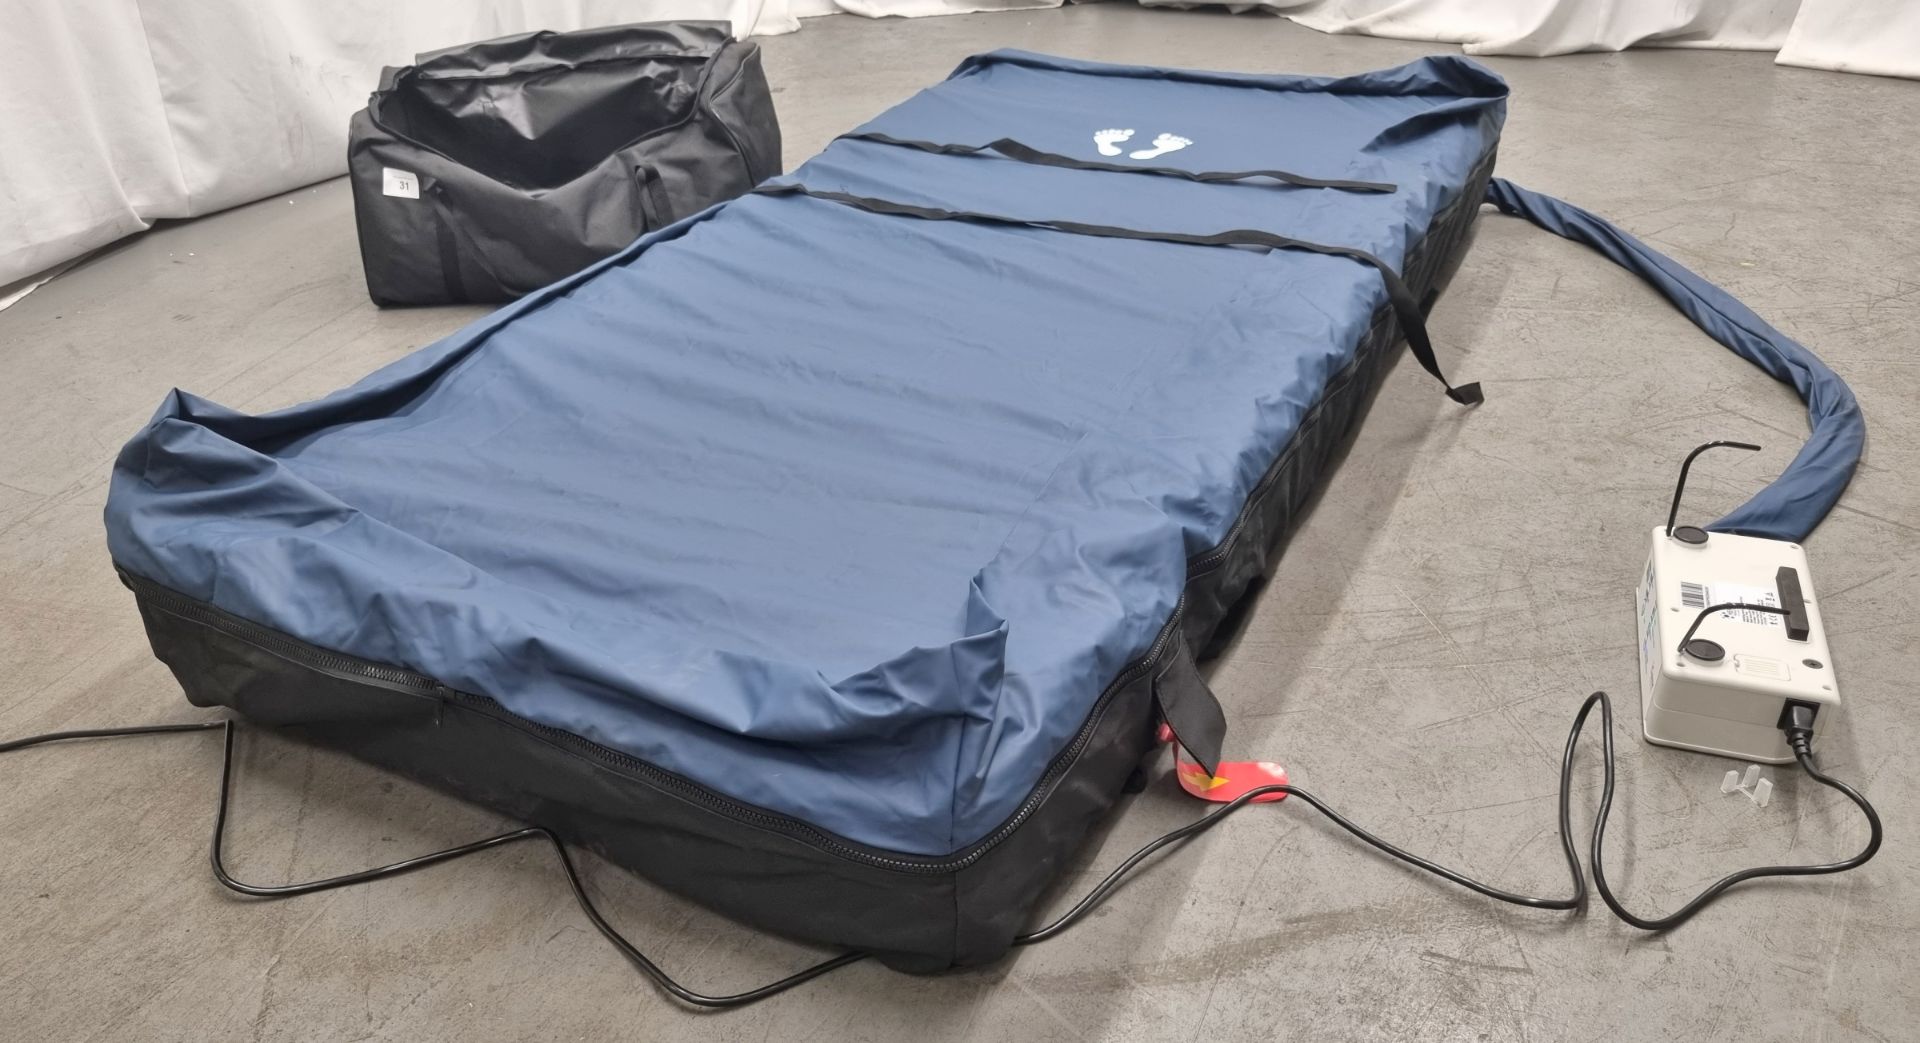 Herida Argyll II dynamic airflow mattress system with digital pump in carry bag - Bild 6 aus 9